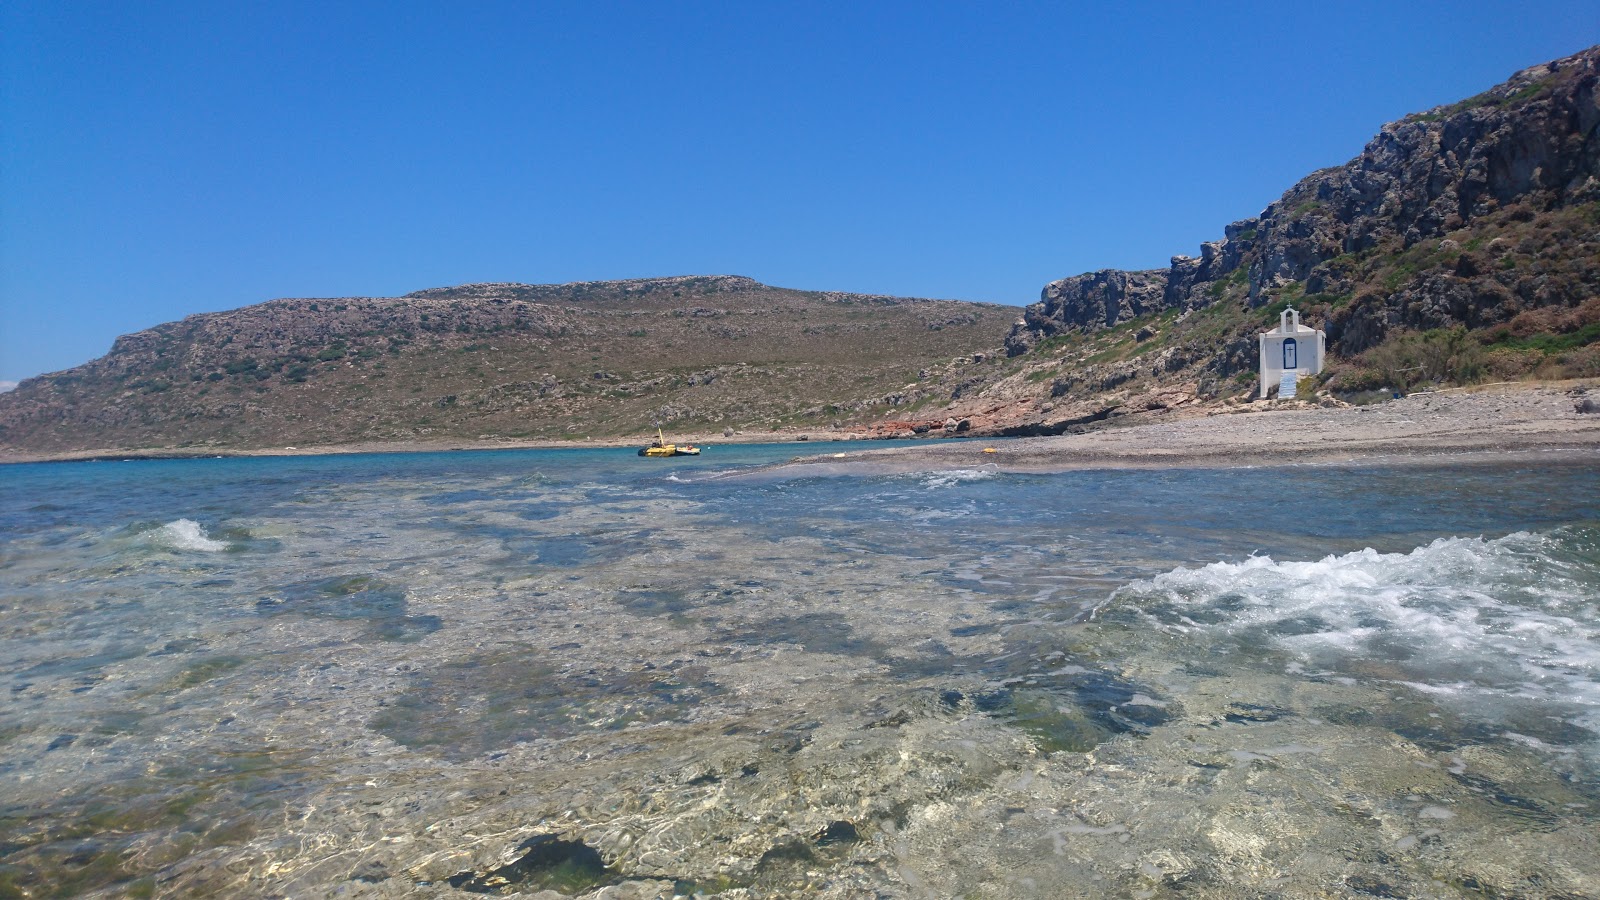 Fotografija Aglyftis beach z kamni površino